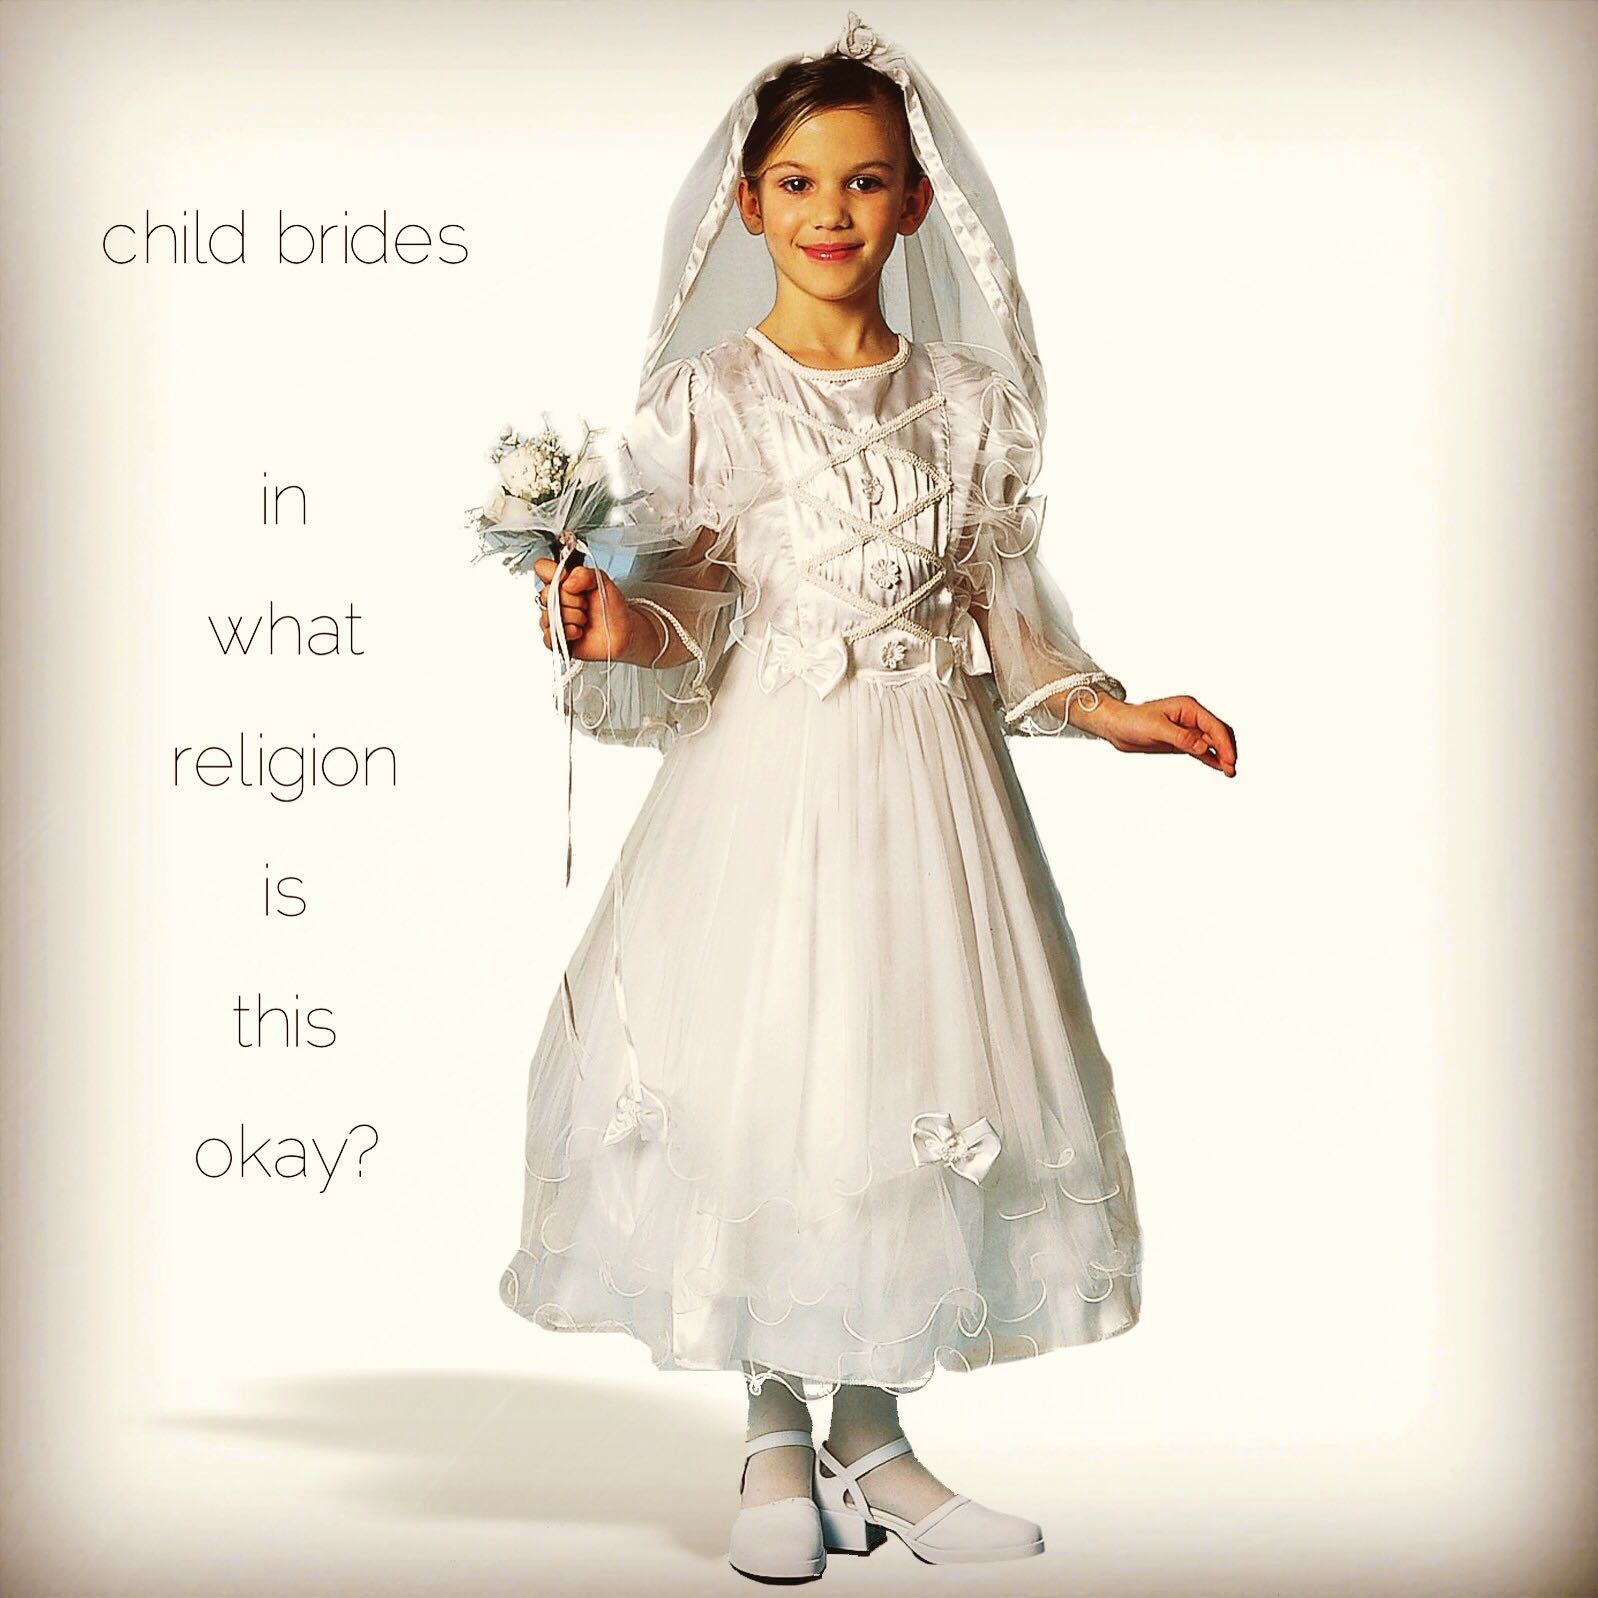 Child brides